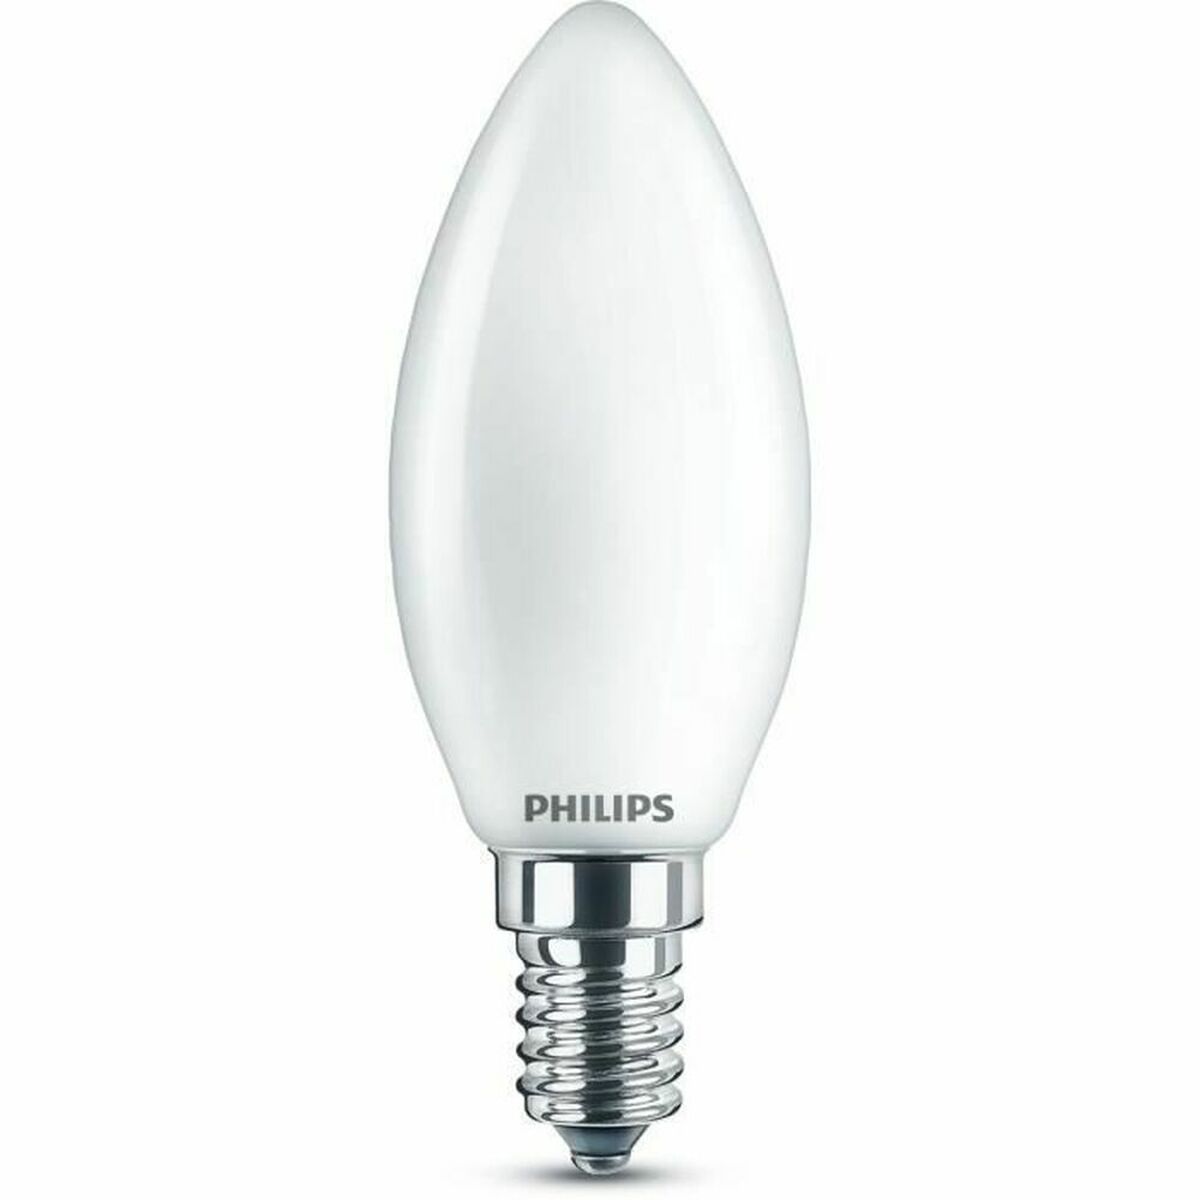 Ledlamp Philips Kaars F 4,3 W E14 470 lm 3,5 x 9,7 cm (2700 K)